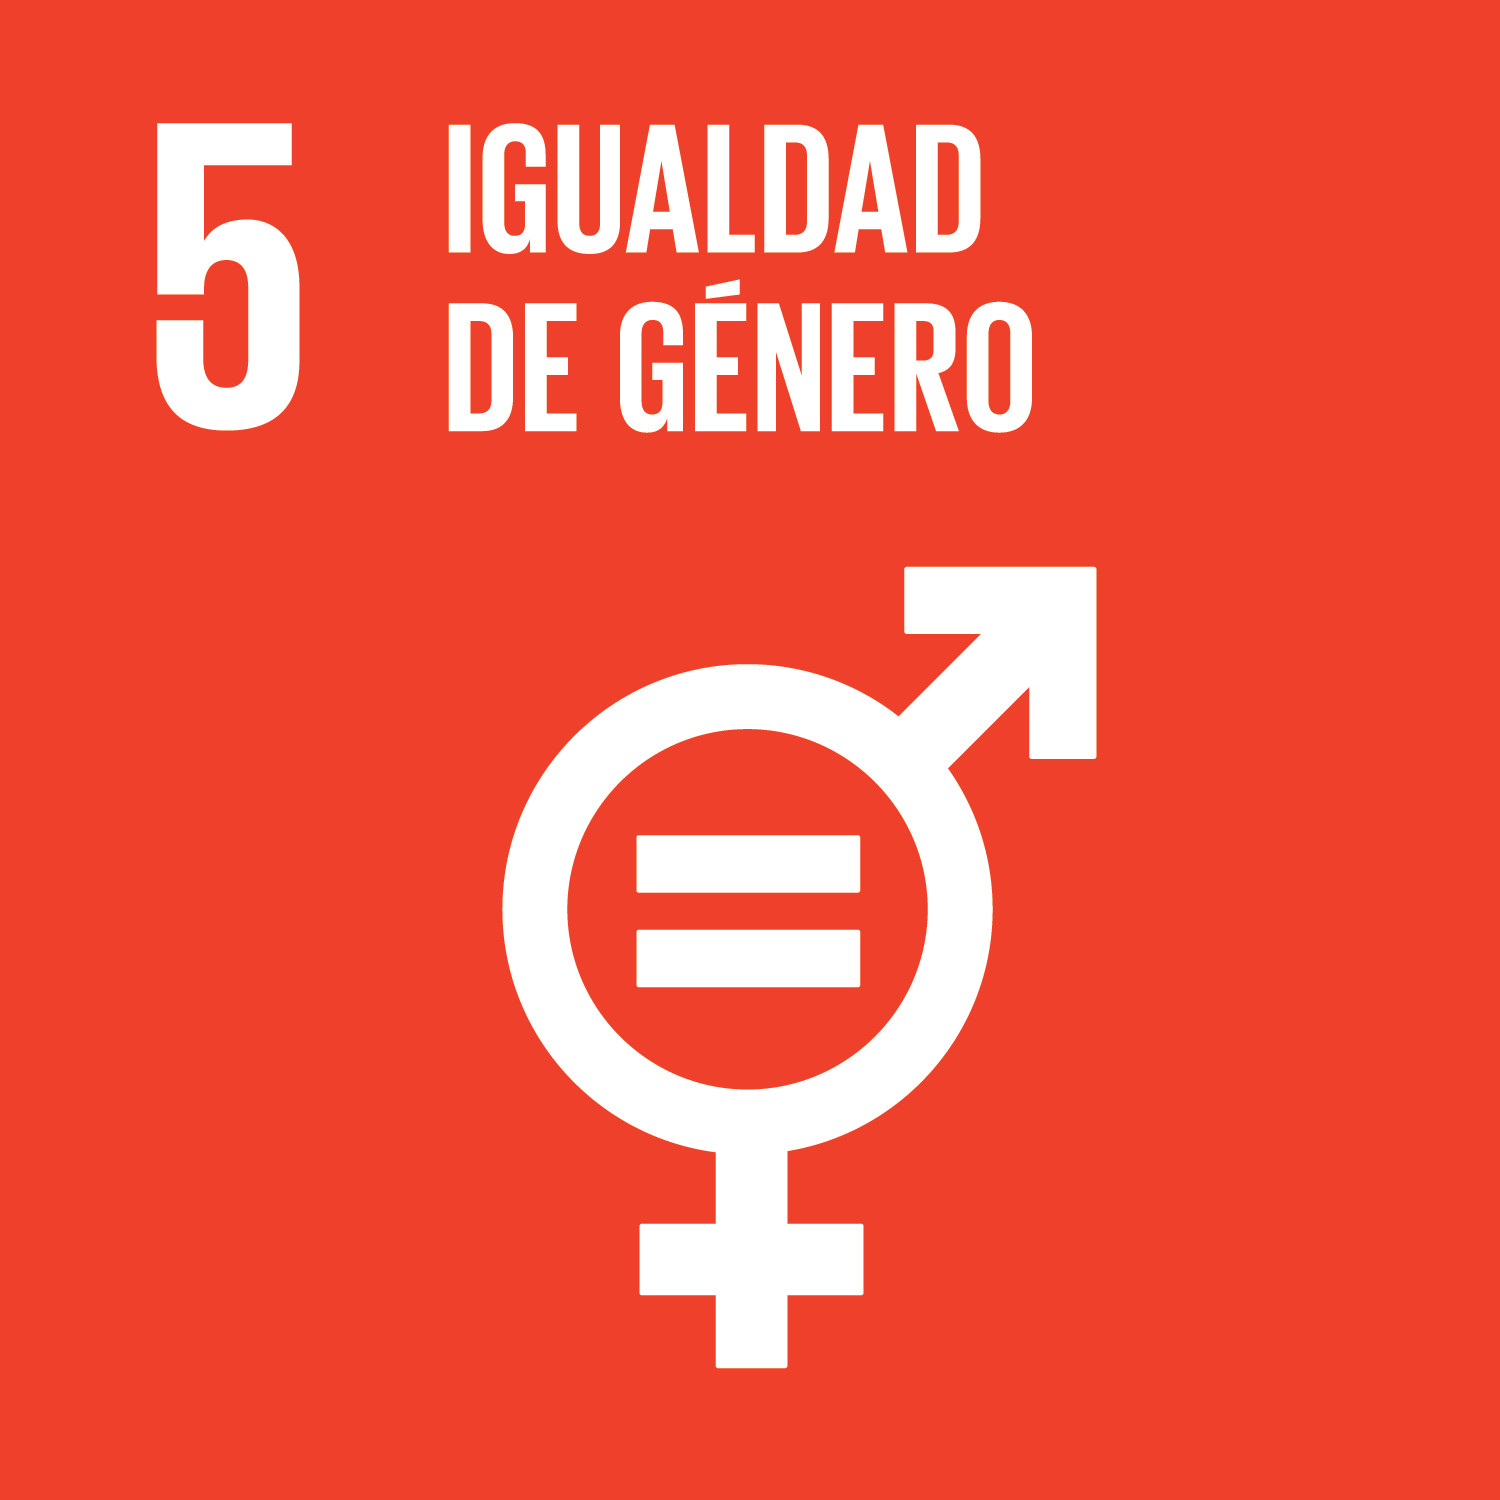 ODS Objetivo 5: Igualdad de género